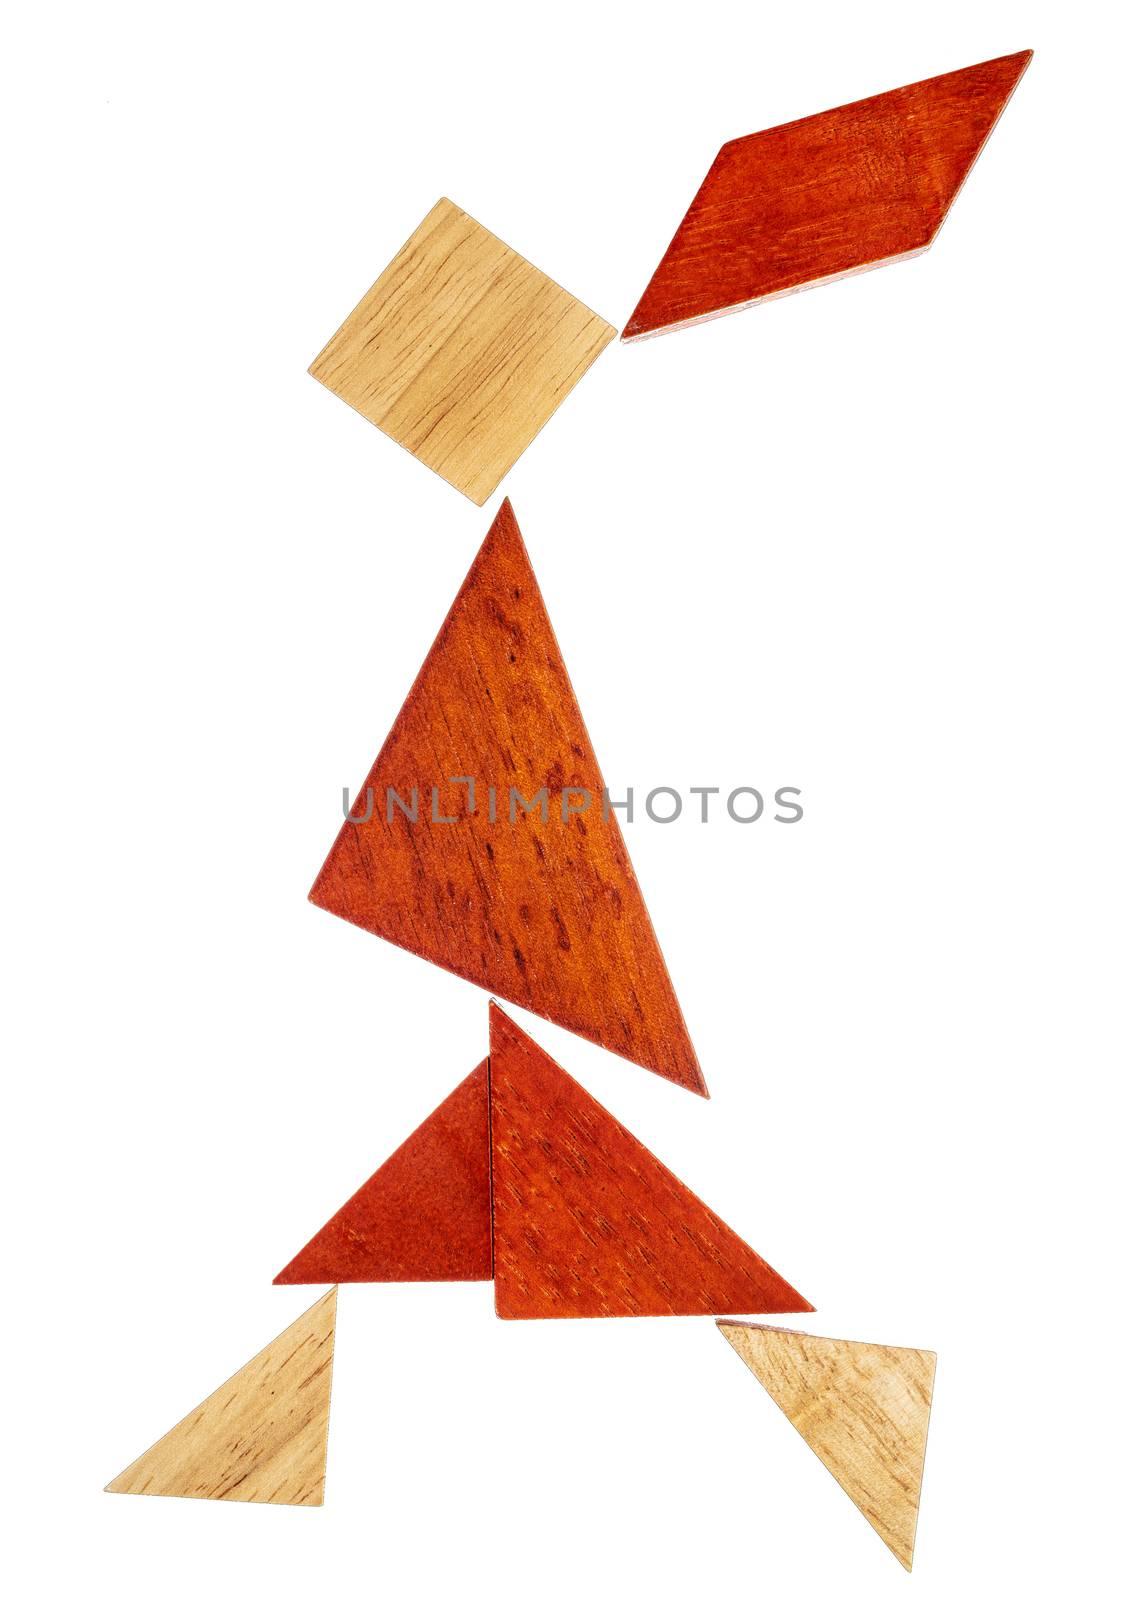 tangram walking girl figure by PixelsAway